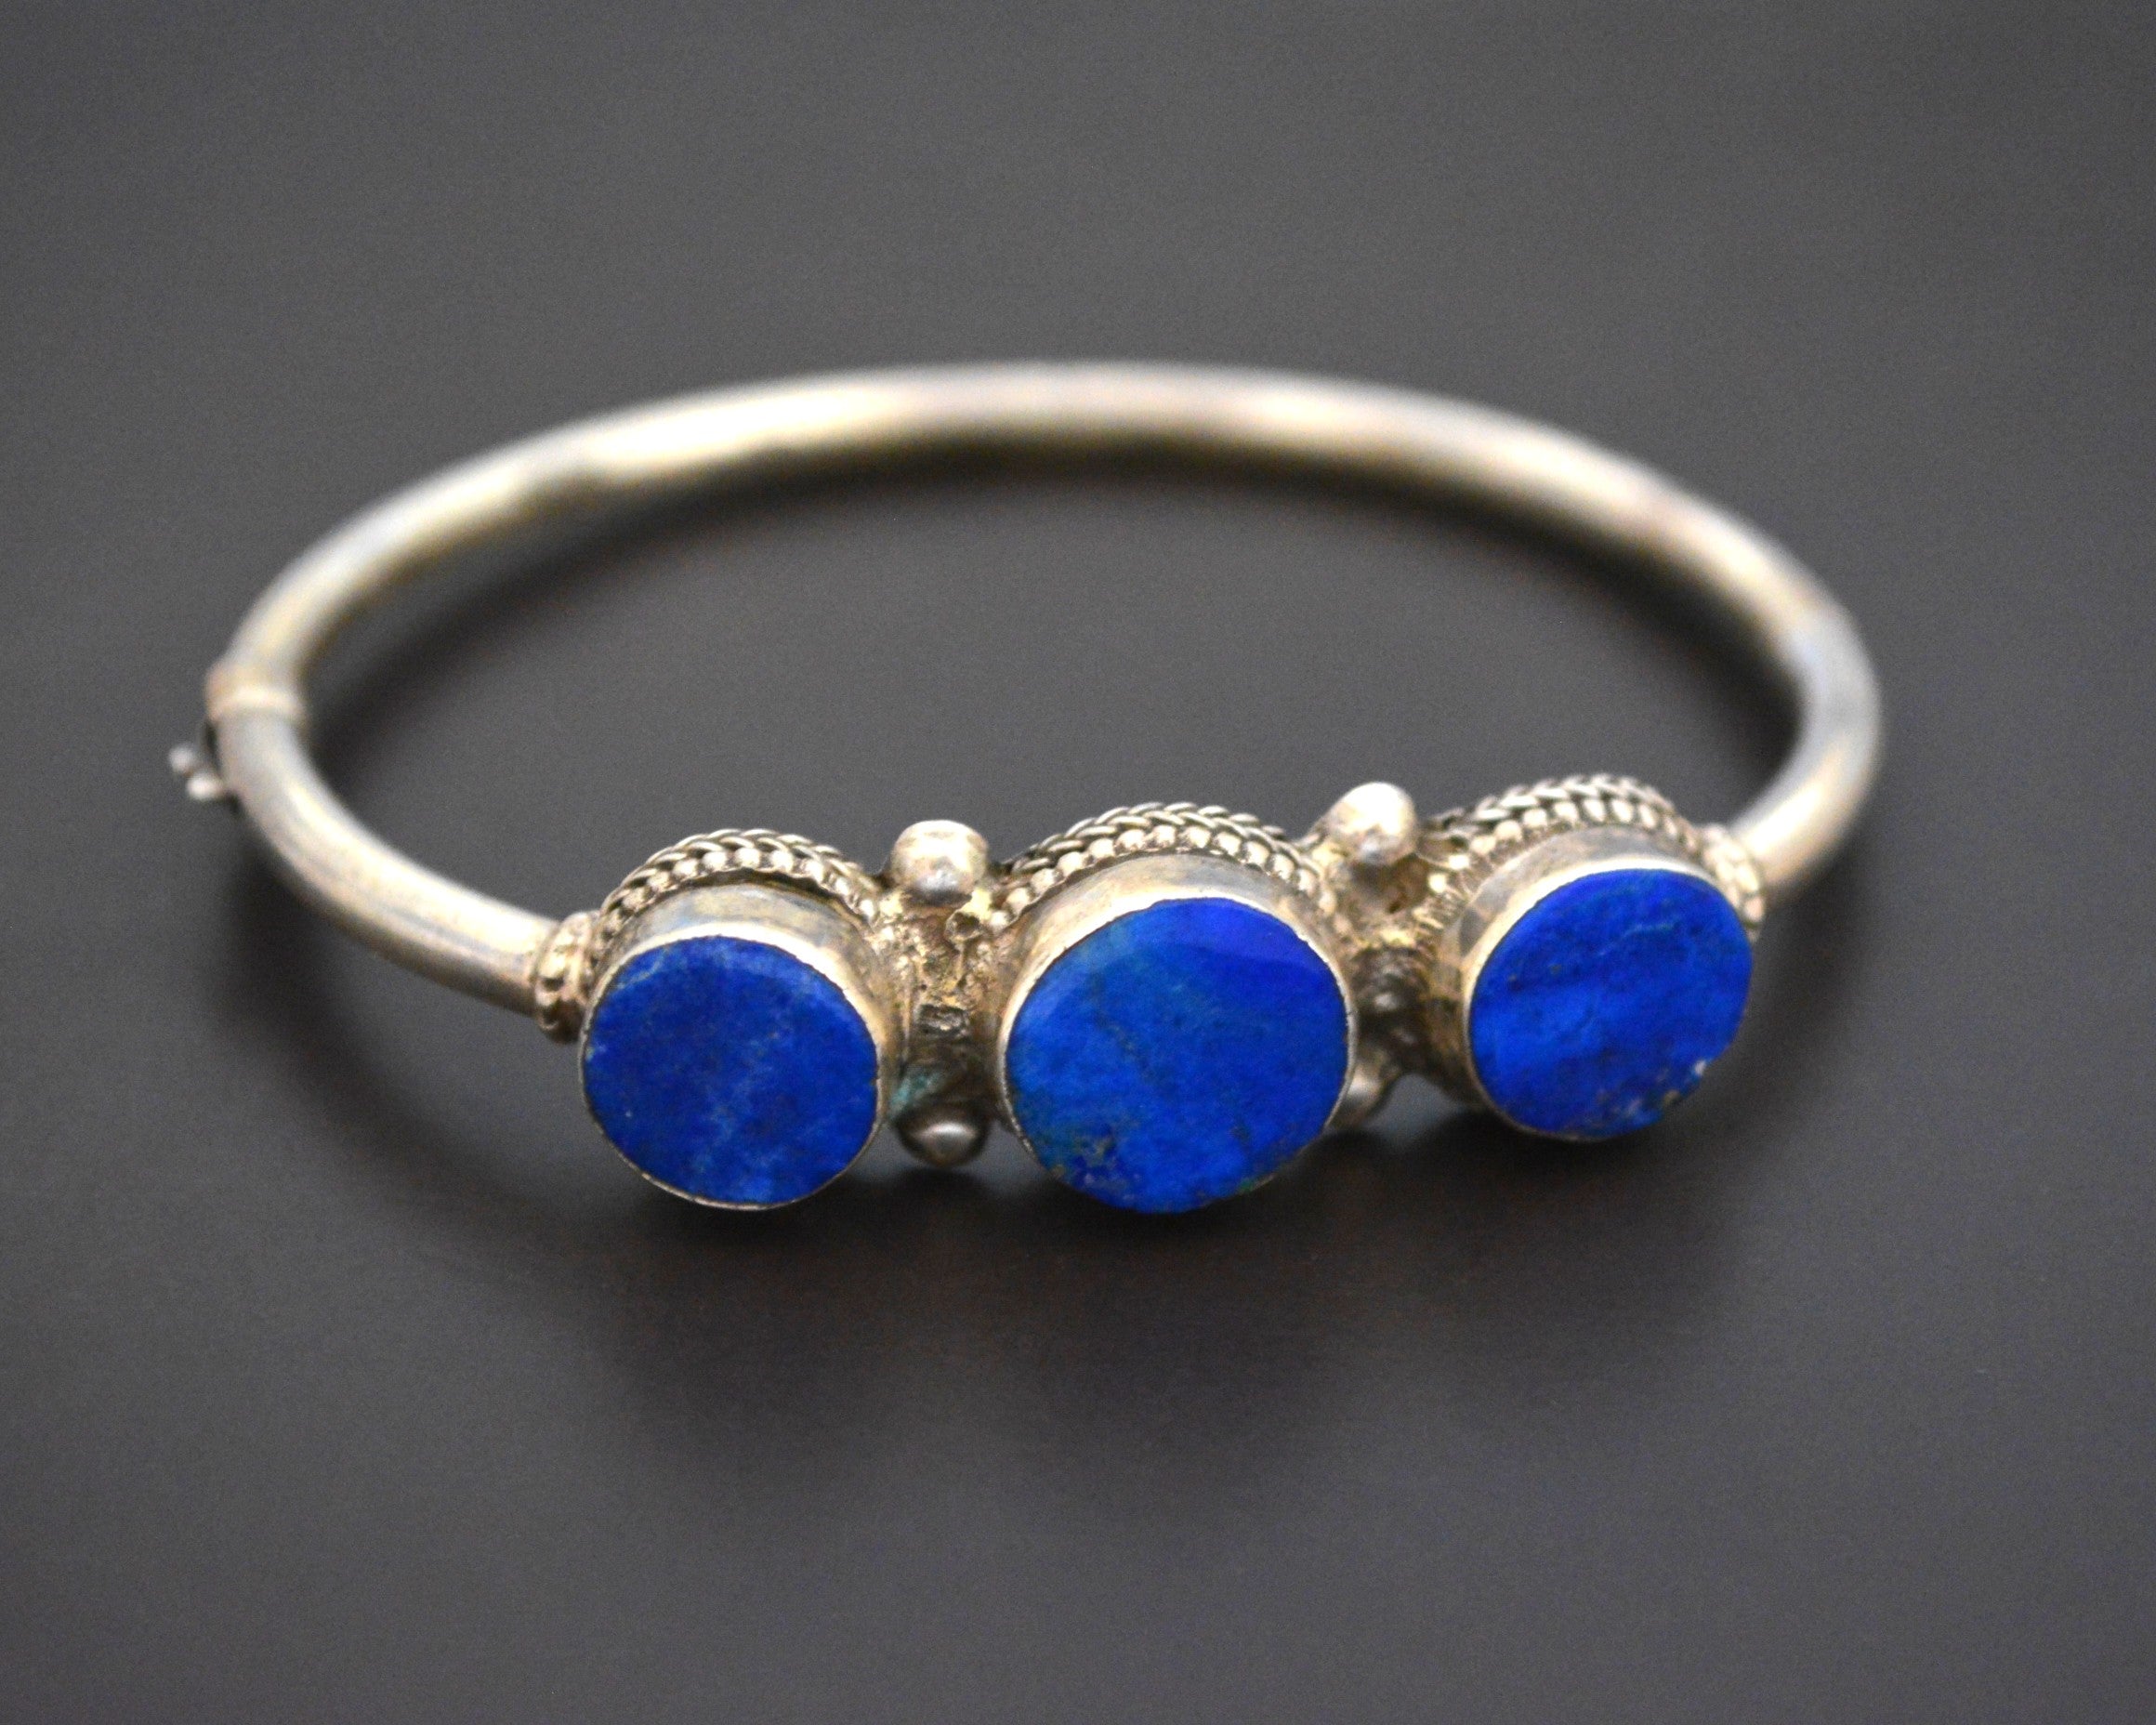 Vintage Lapis Lazuli Bracelet from India - SMALL - Hinged